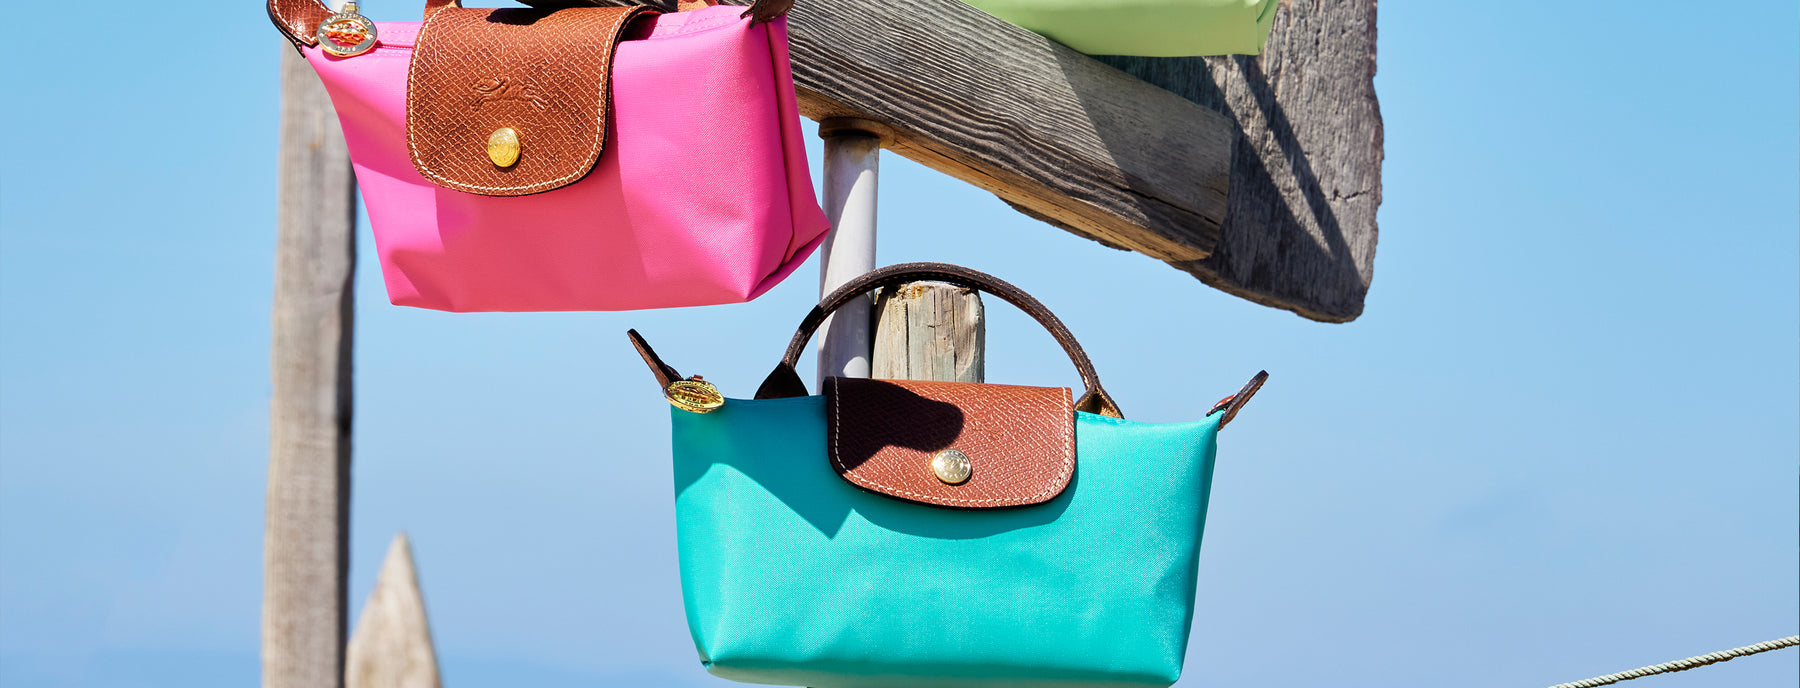 Women's Longchamp Designer Handbags